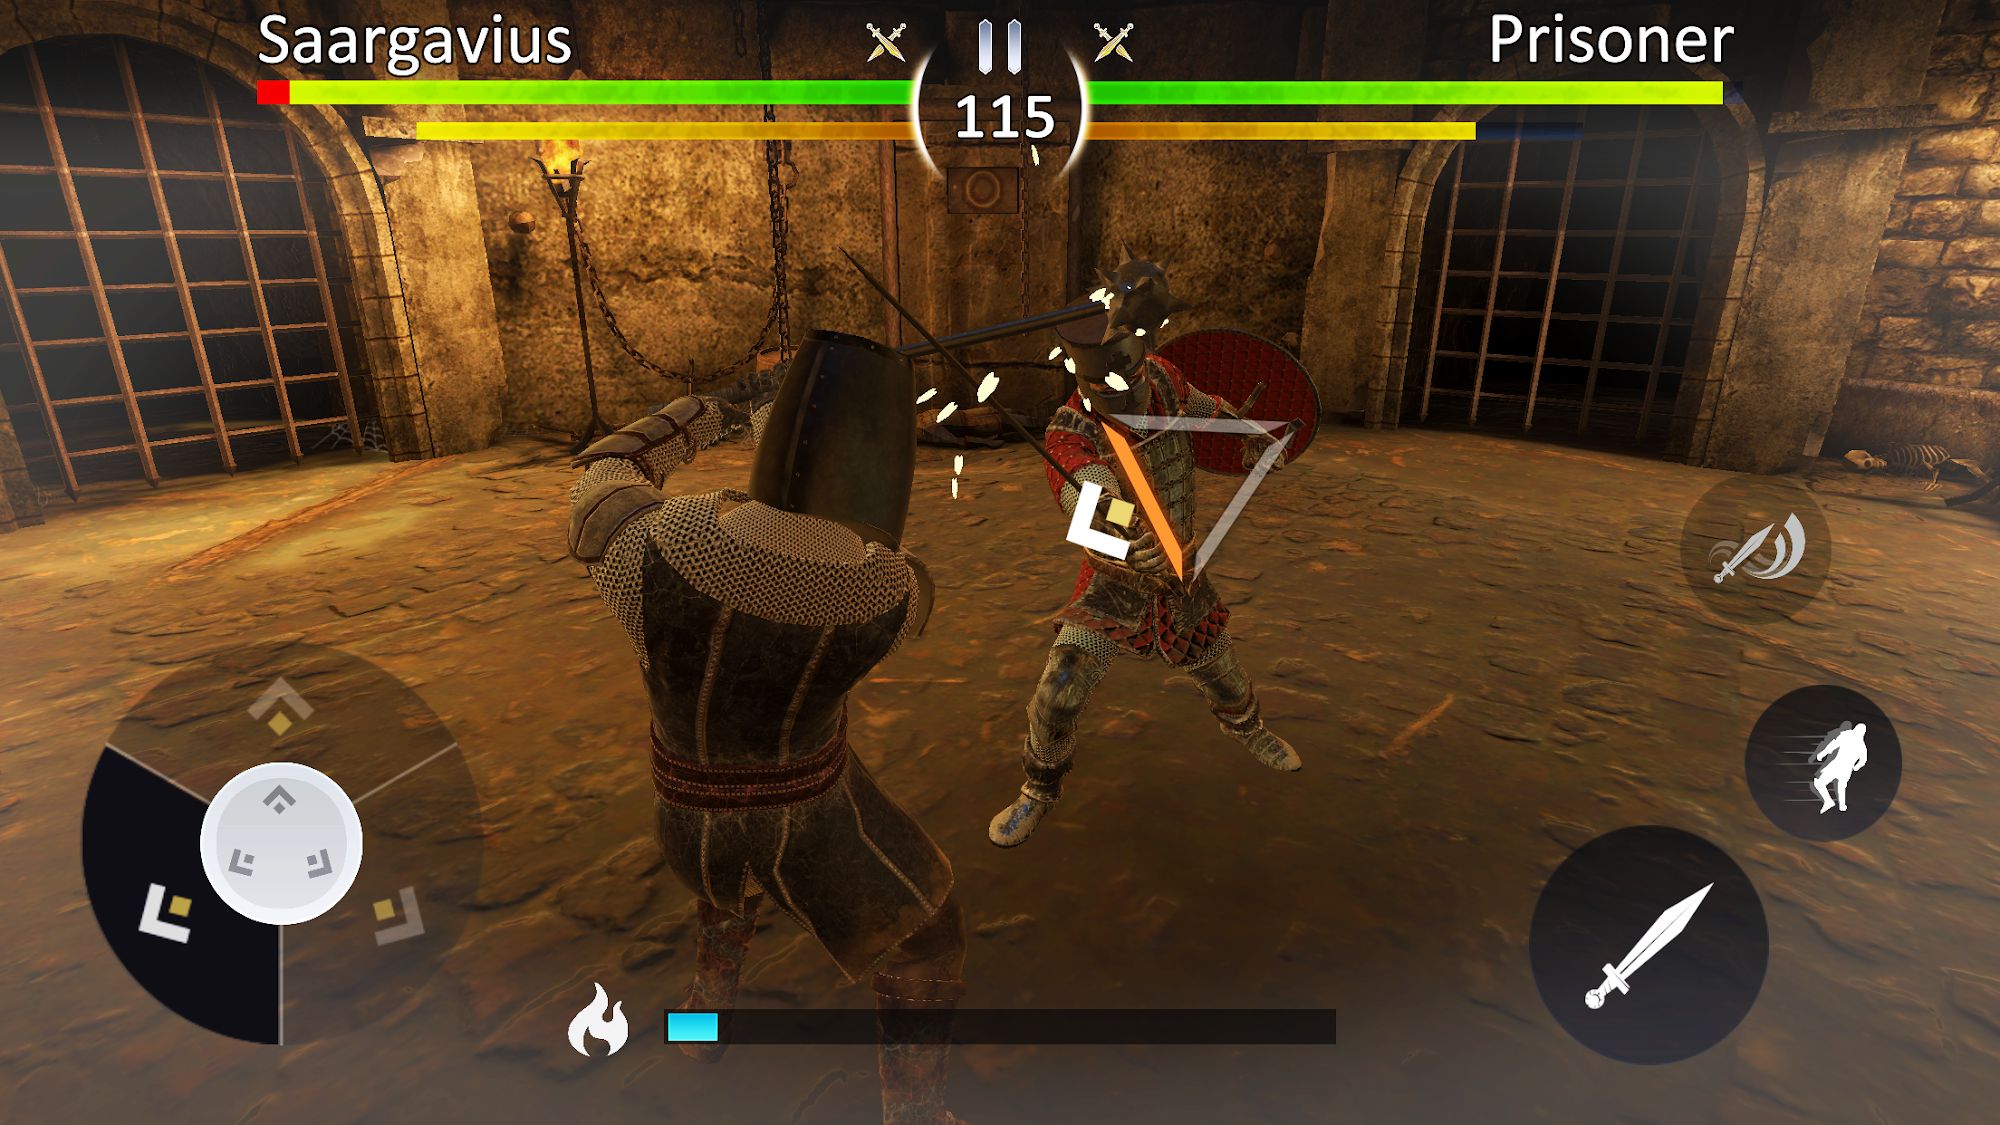 Knights Fight 2: Honor & Glory screenshot 1